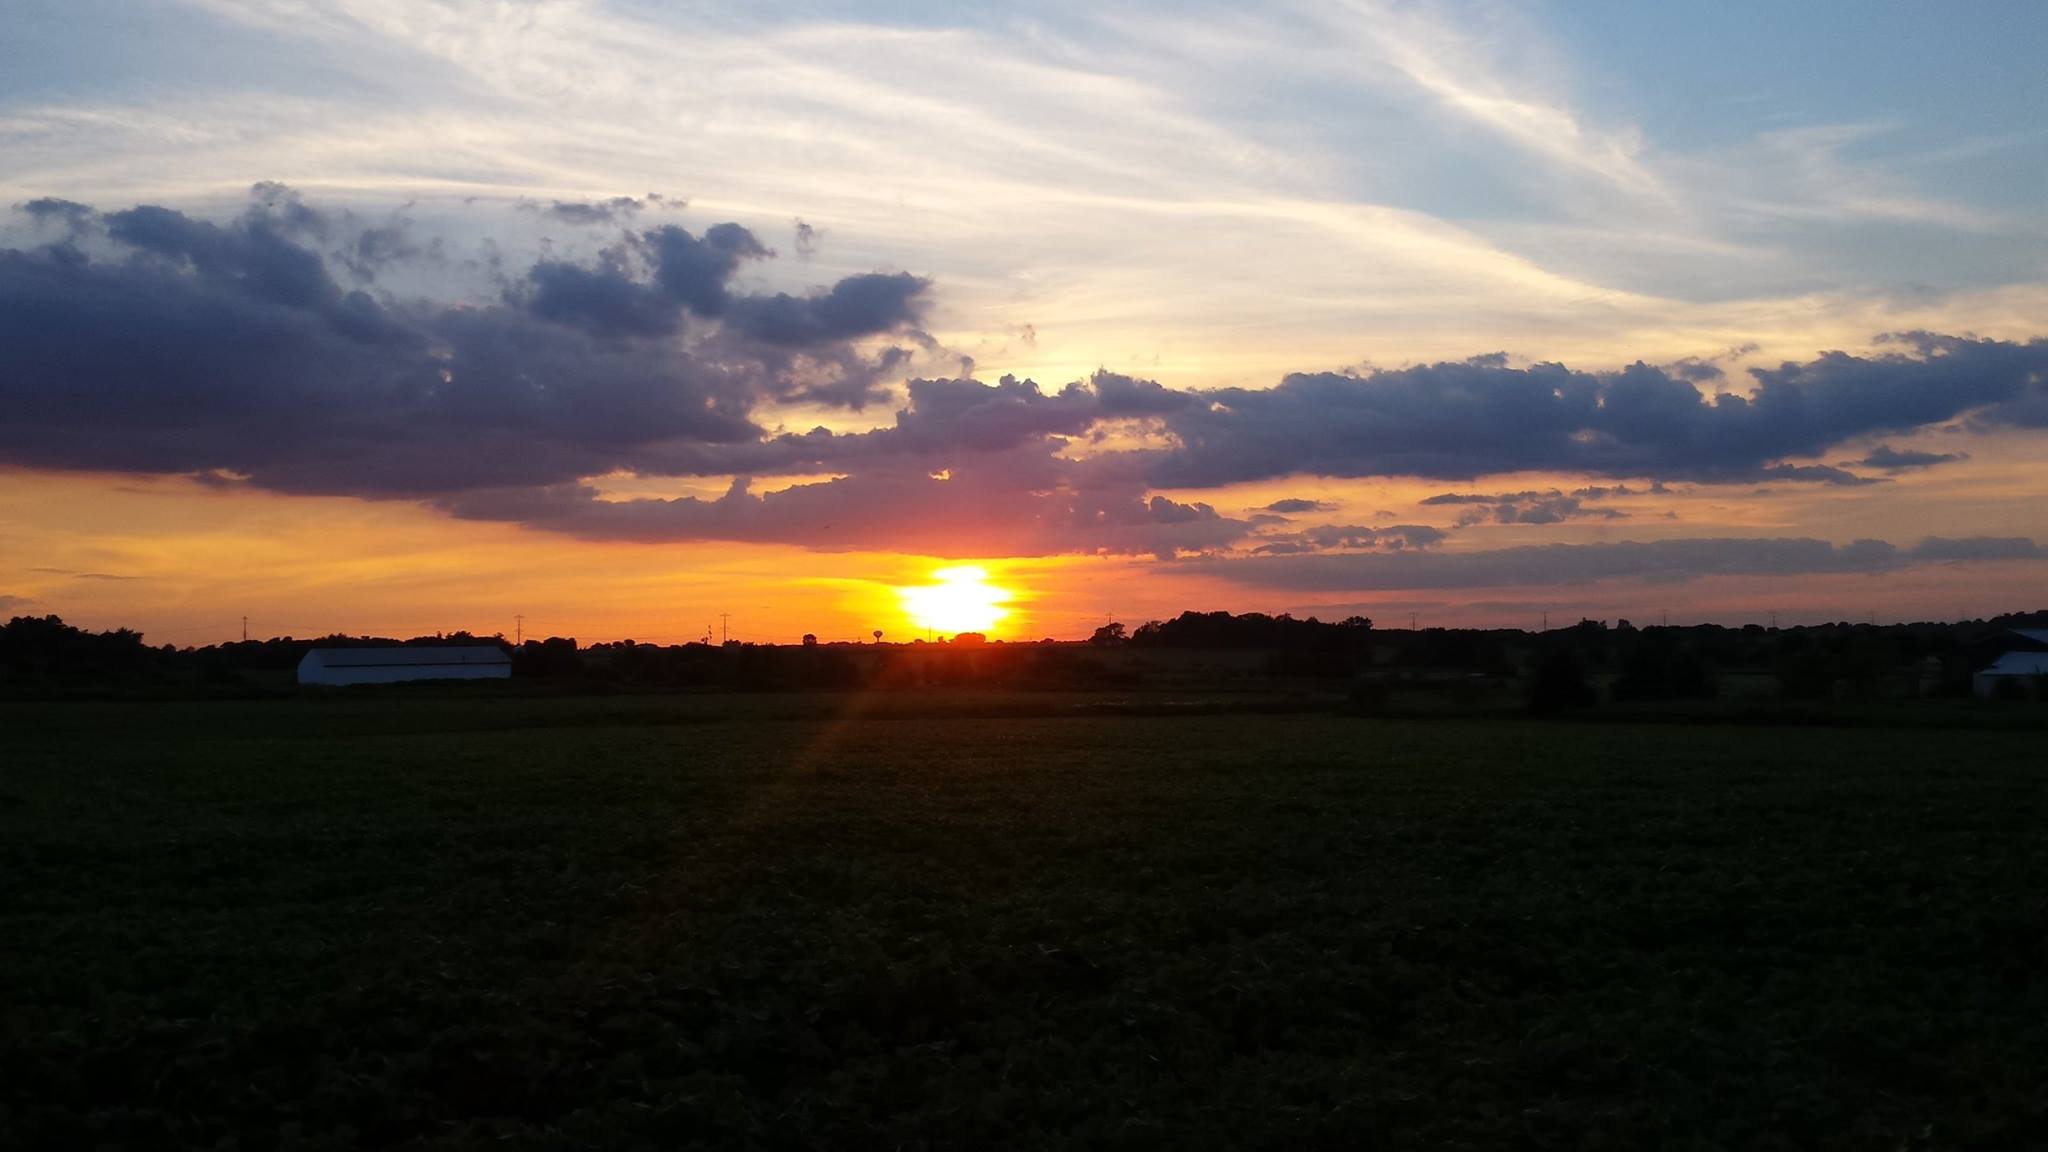 sunset_over_field_by_abekowalski-d8hvblm